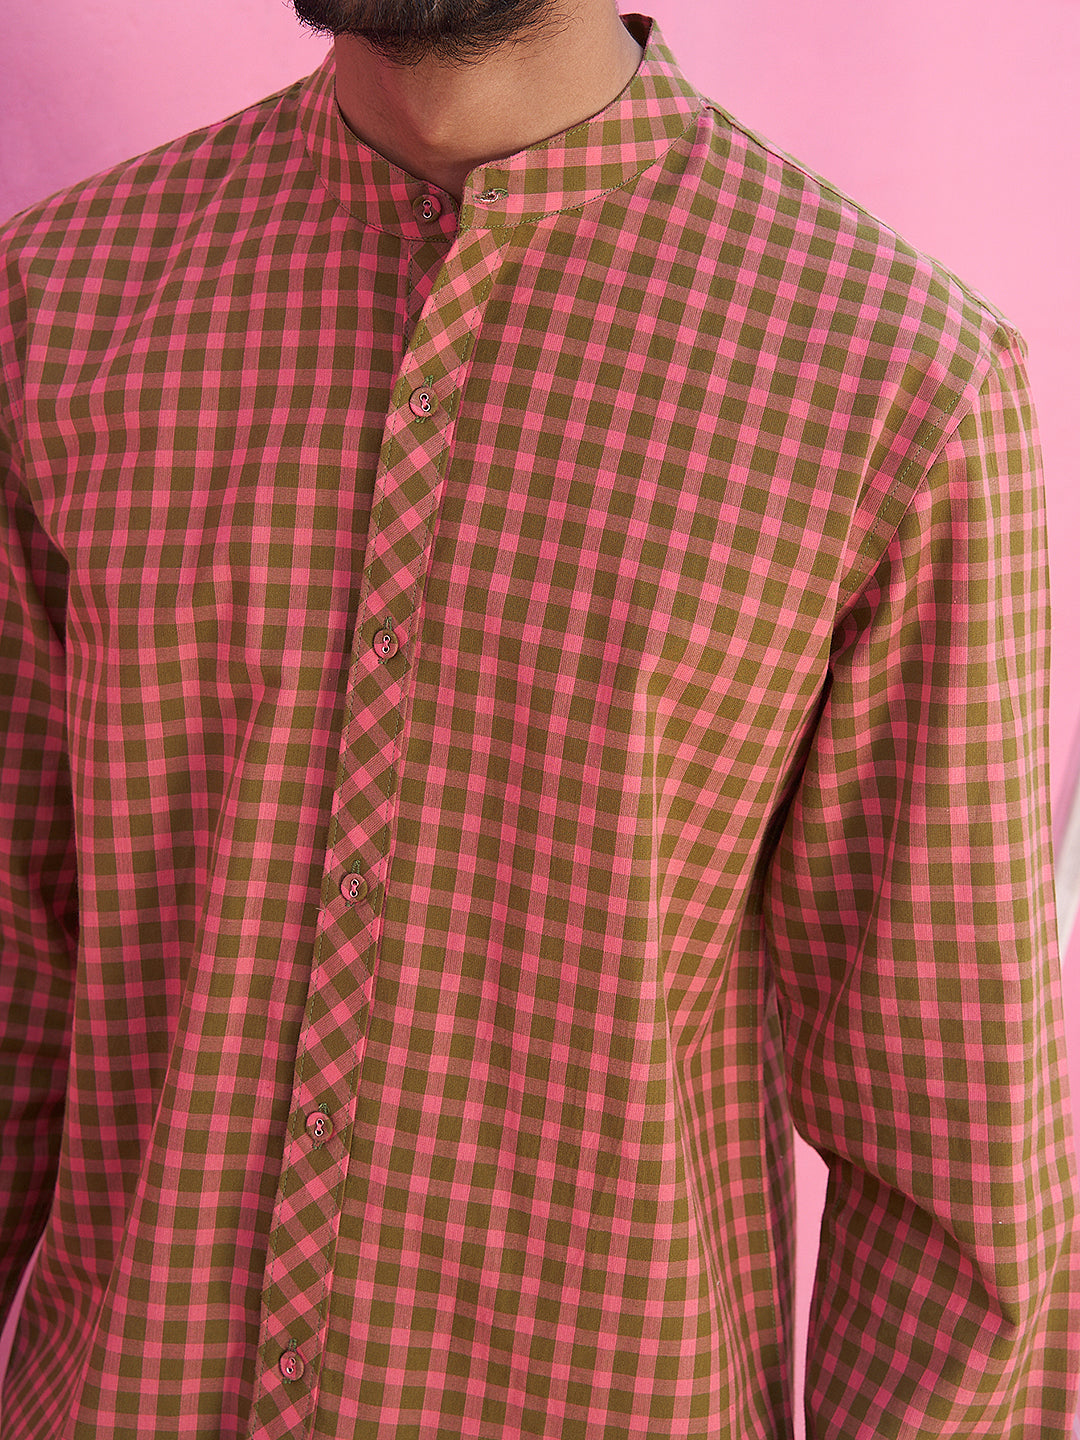 Pink and green gingham checks shirt